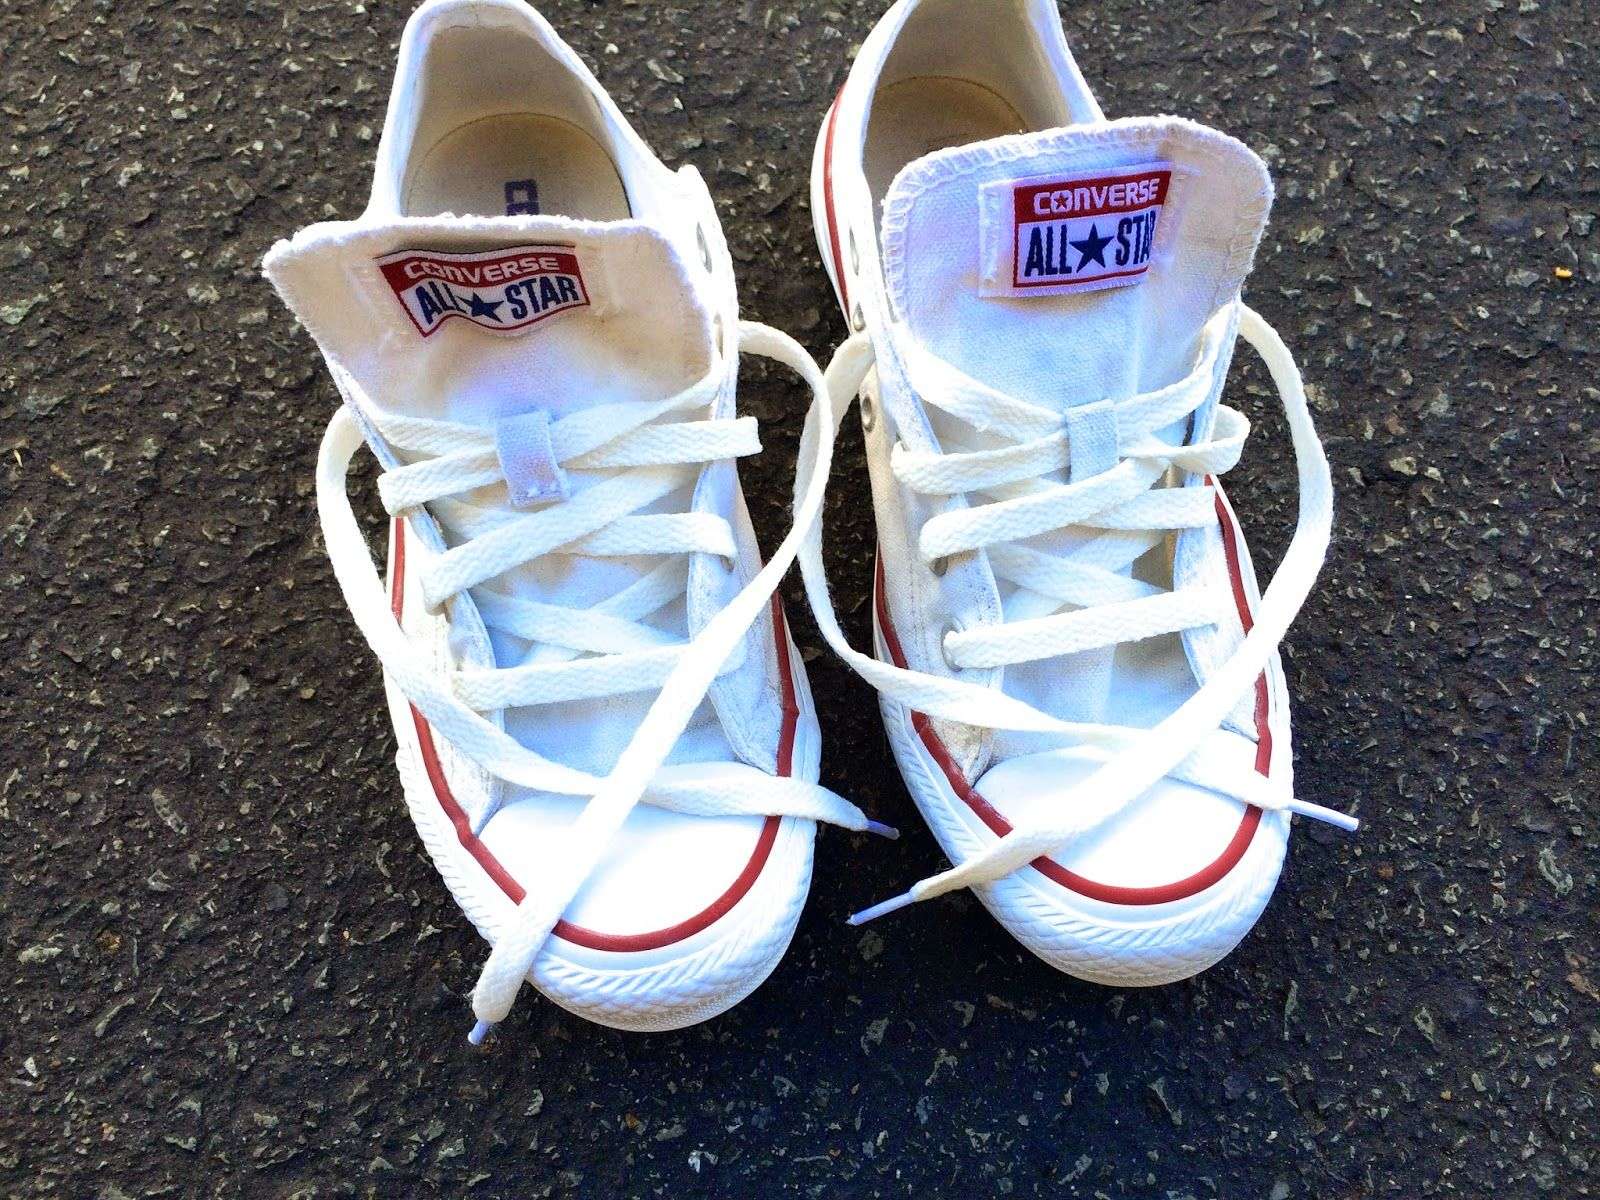 Hooray: White shoes: Make them white again!